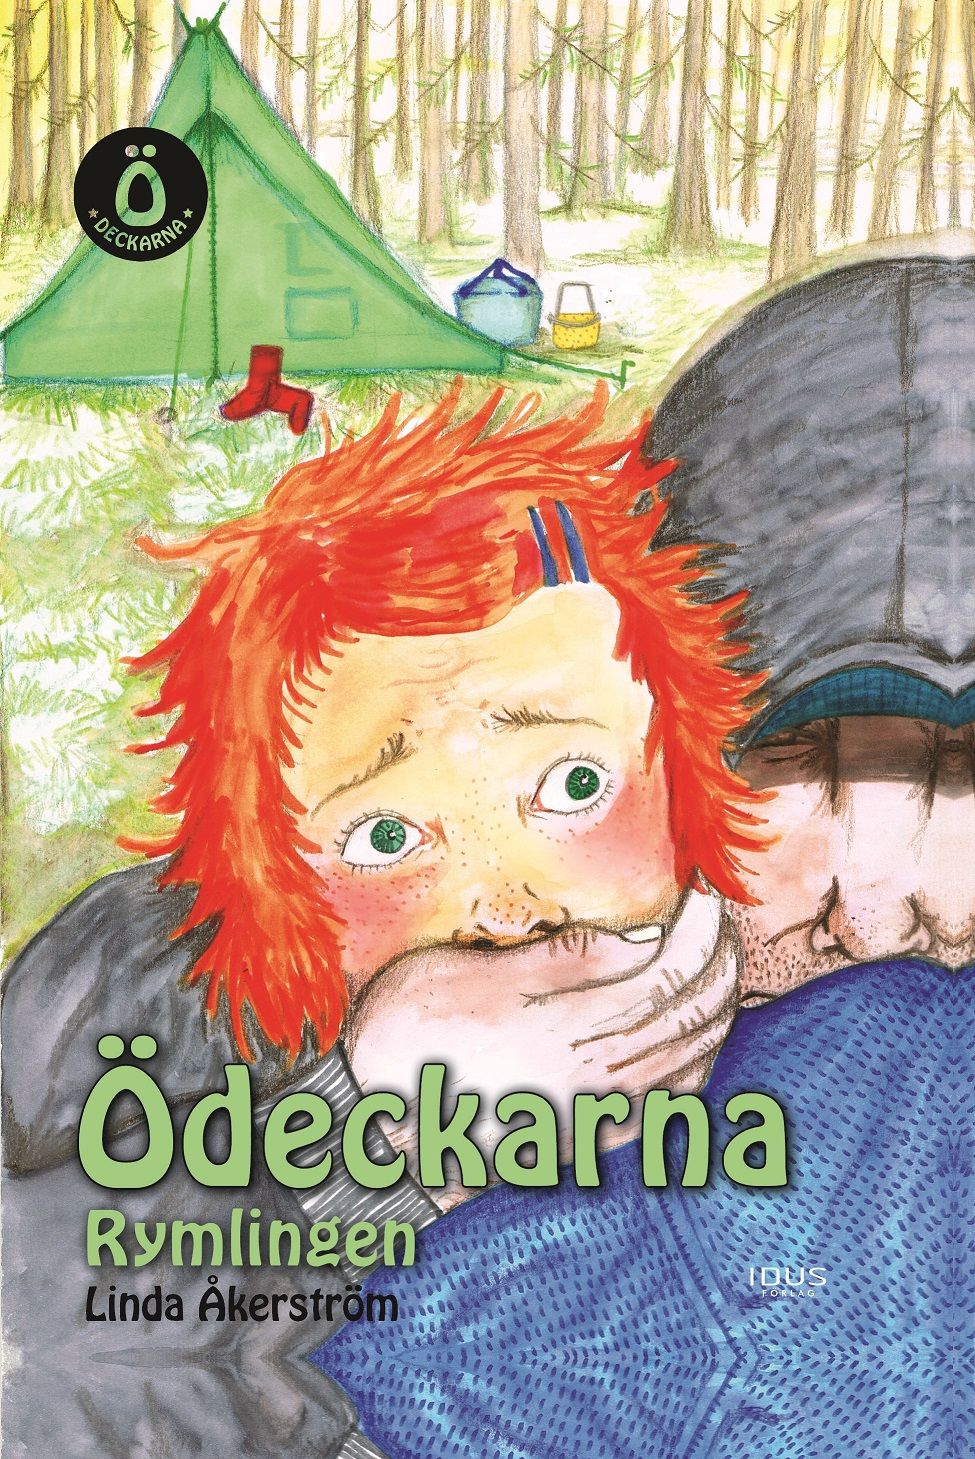 Ödeckarna - Rymlingen, e-bog af Linda Åkerström